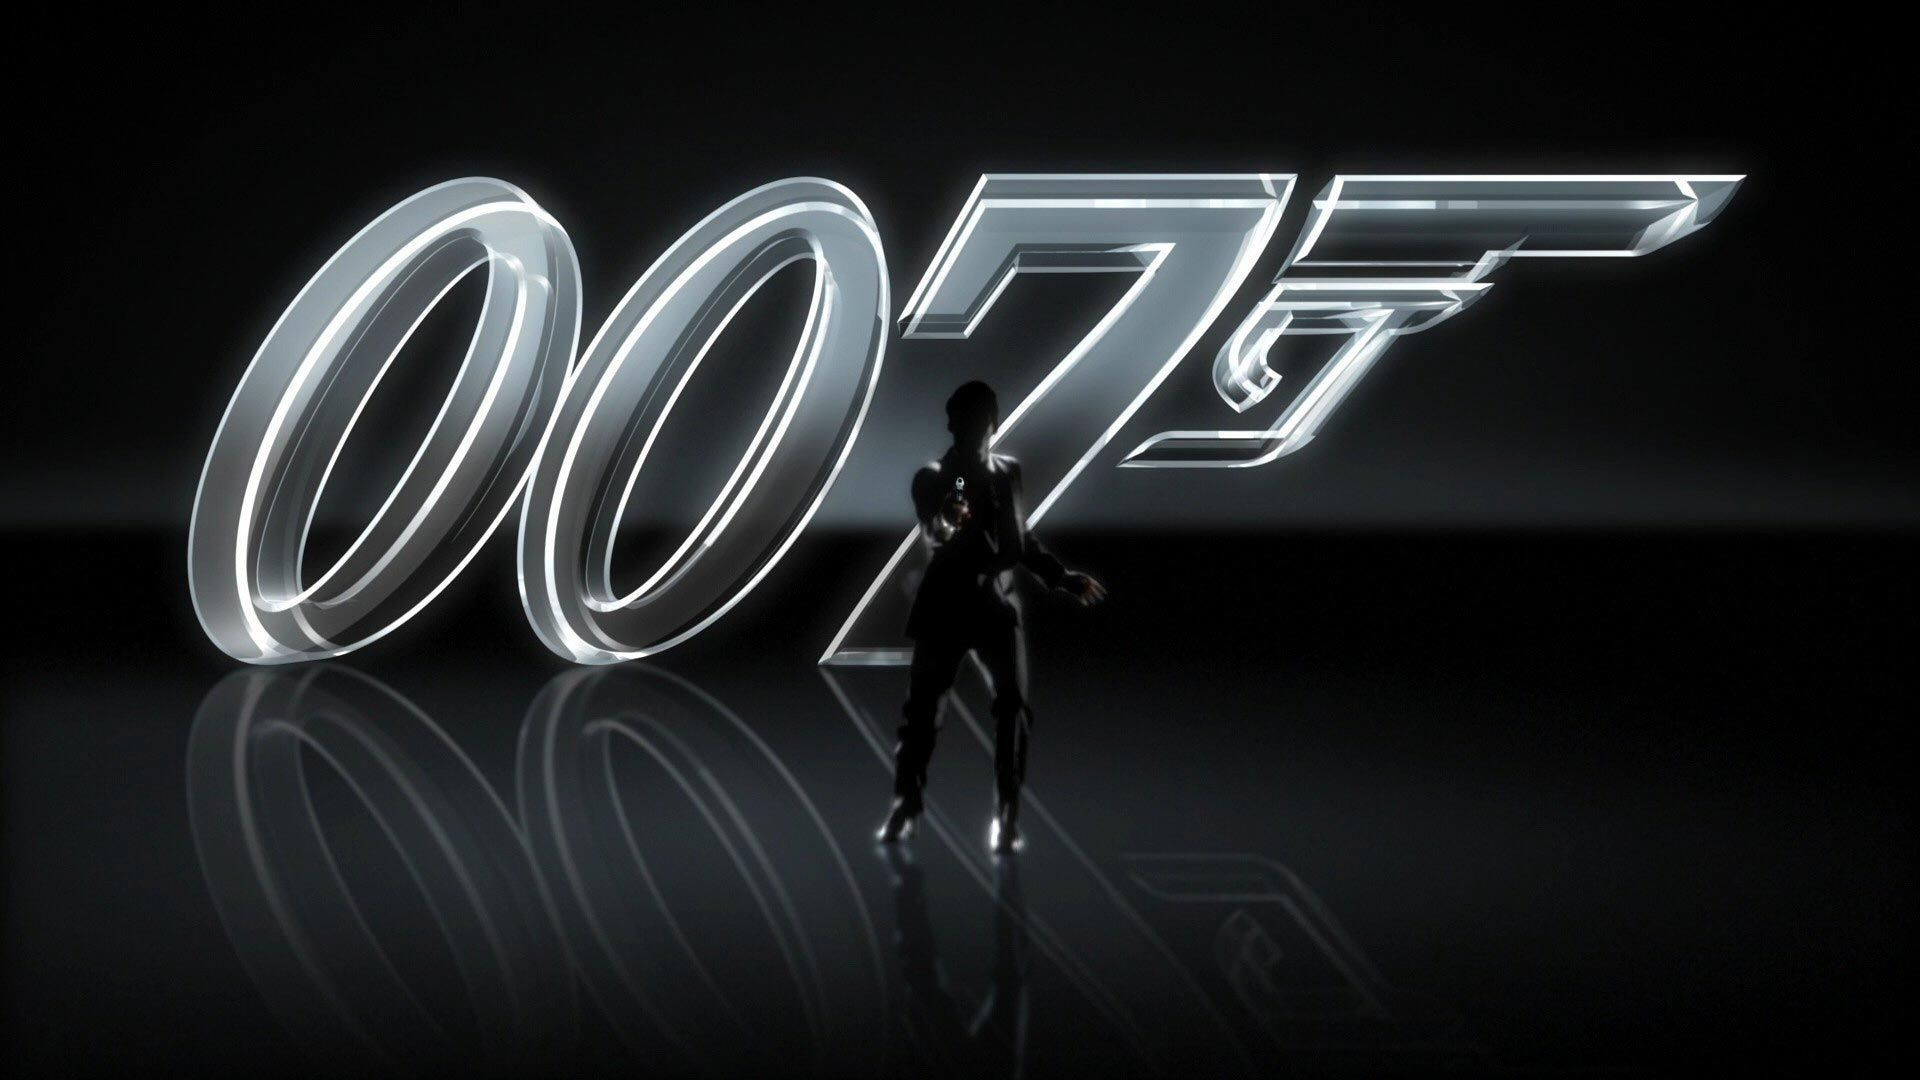 James Bond 007 Wallpaper Free James Bond 007 Background